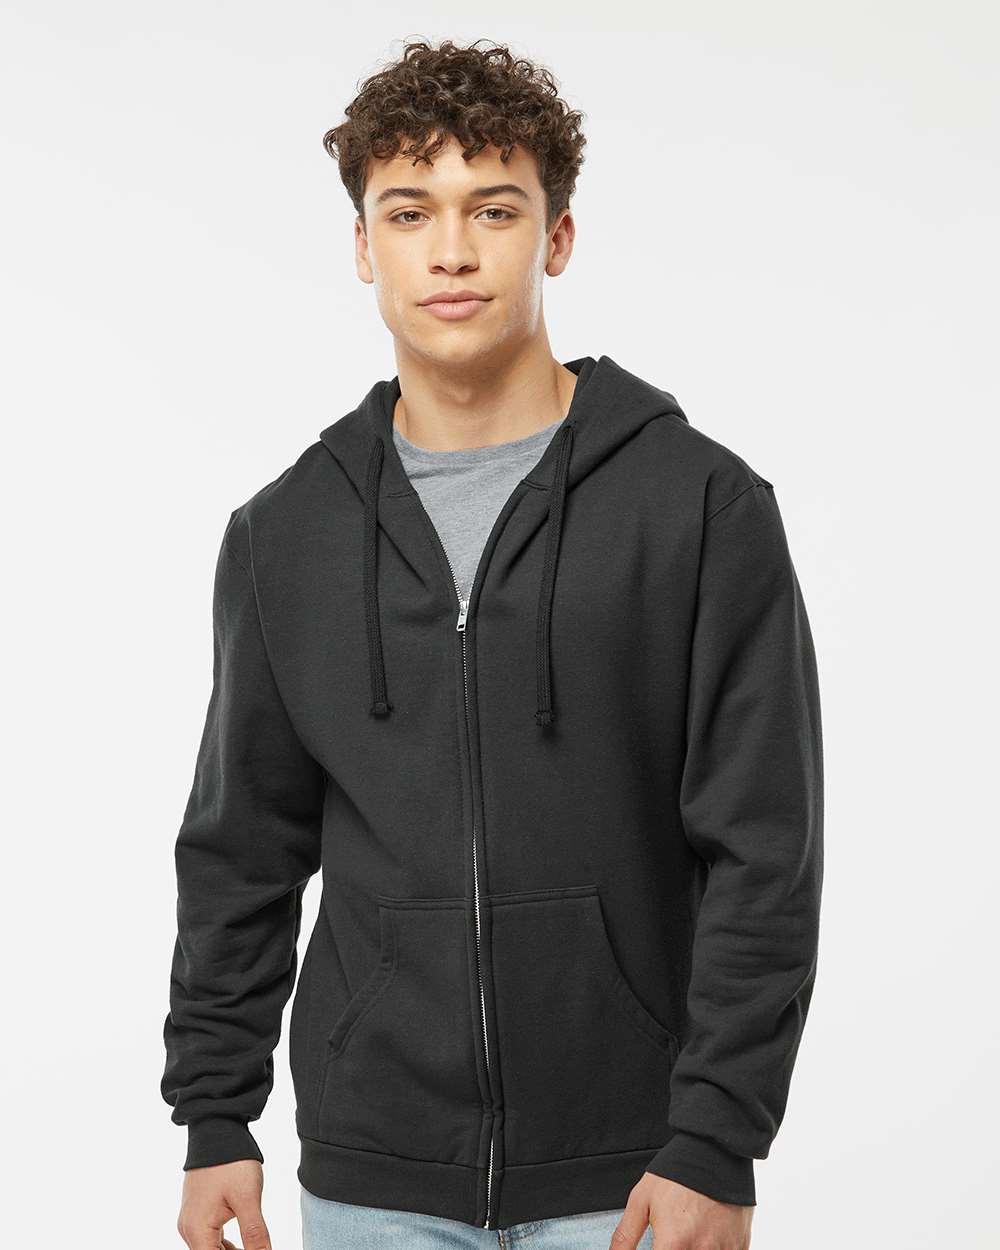 Pretreated Tultex 331 Full-Zip Hooded Sweatshirt Black